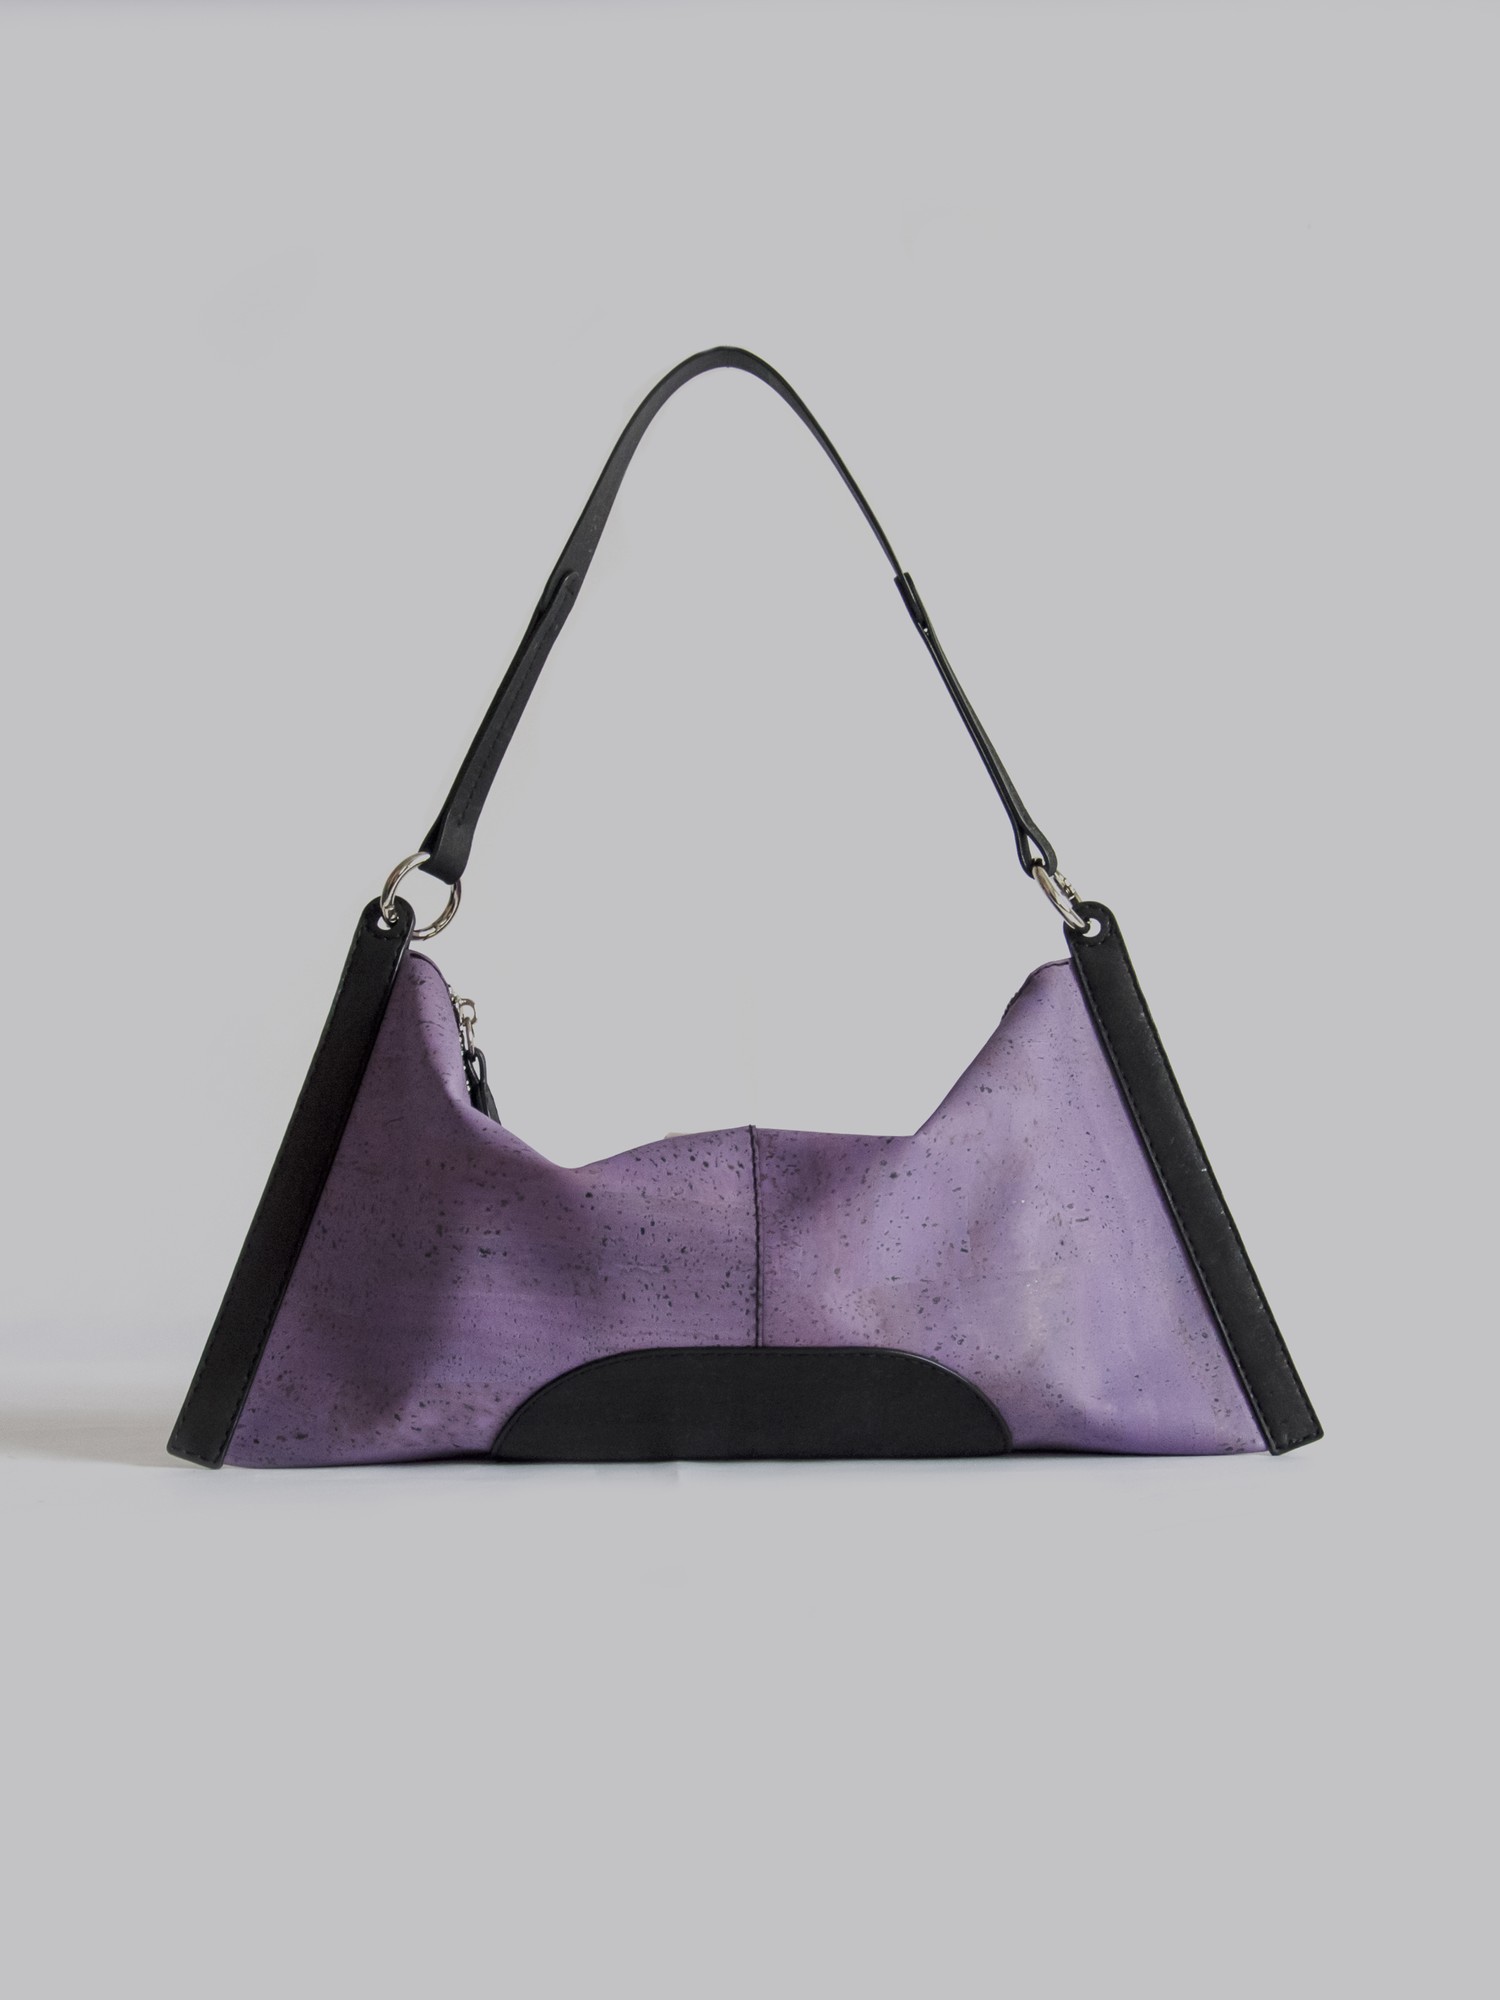 Natural cork handbag Ilsa in black and purple combination